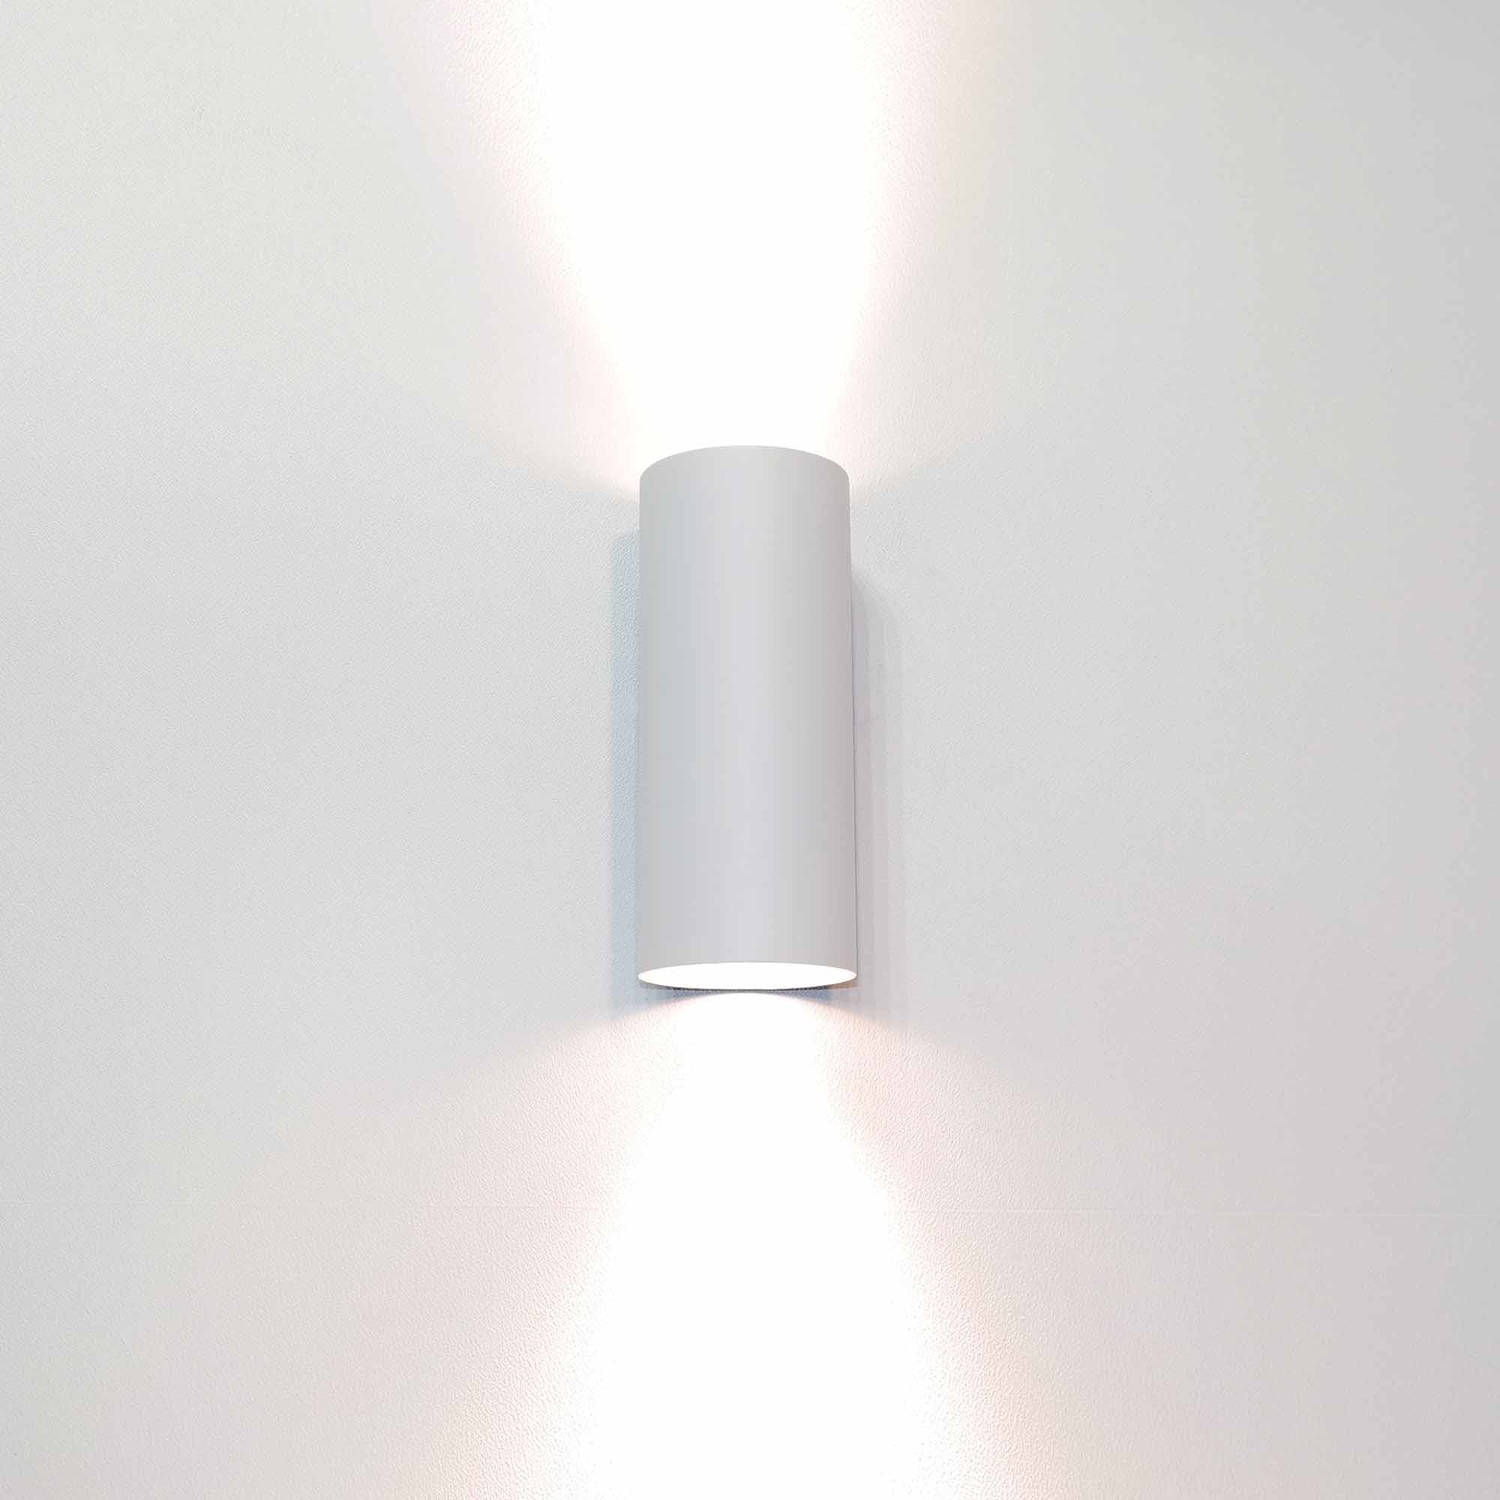 Artdelight Wandlamp Roulo 2 lichts H 15,4 Ø 6,5 cm wit